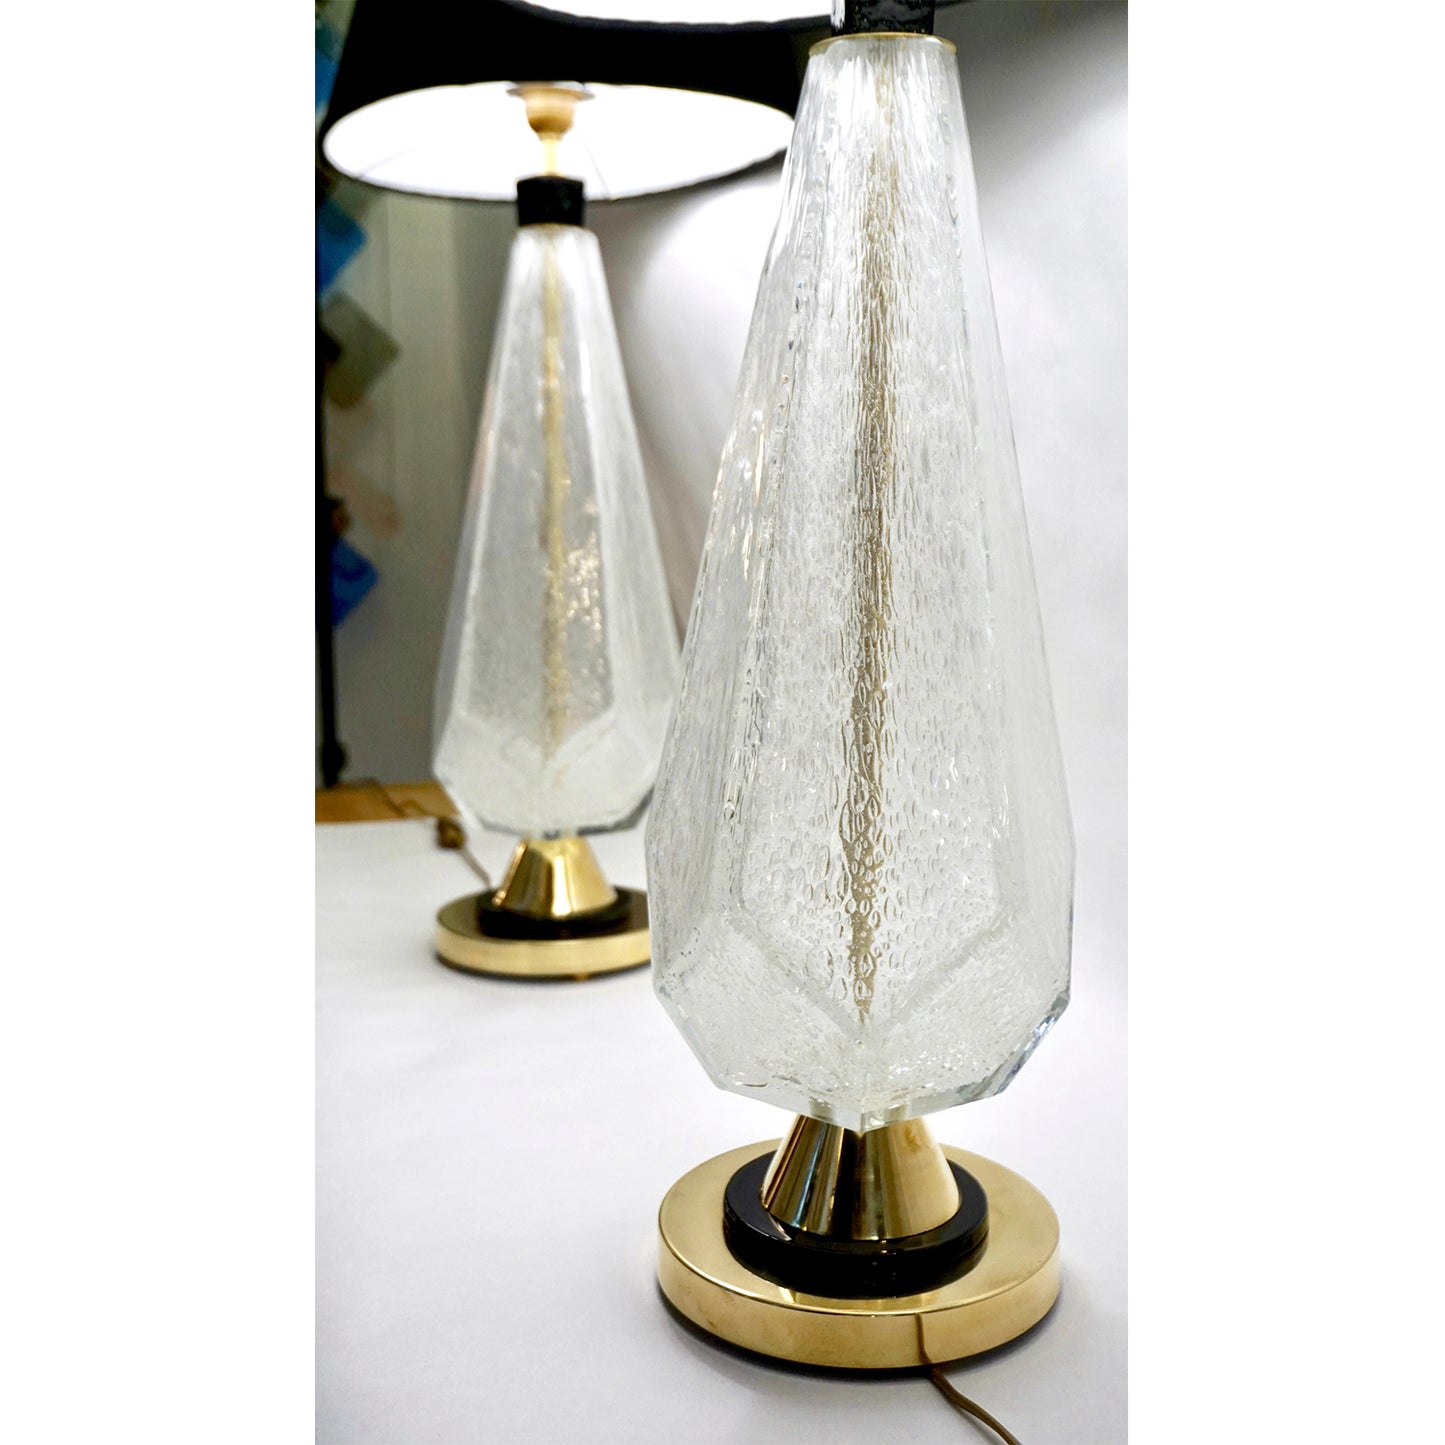 Contemporary Italian Pair of Diamond Cut Black and Crystal Murano Glass Lamps